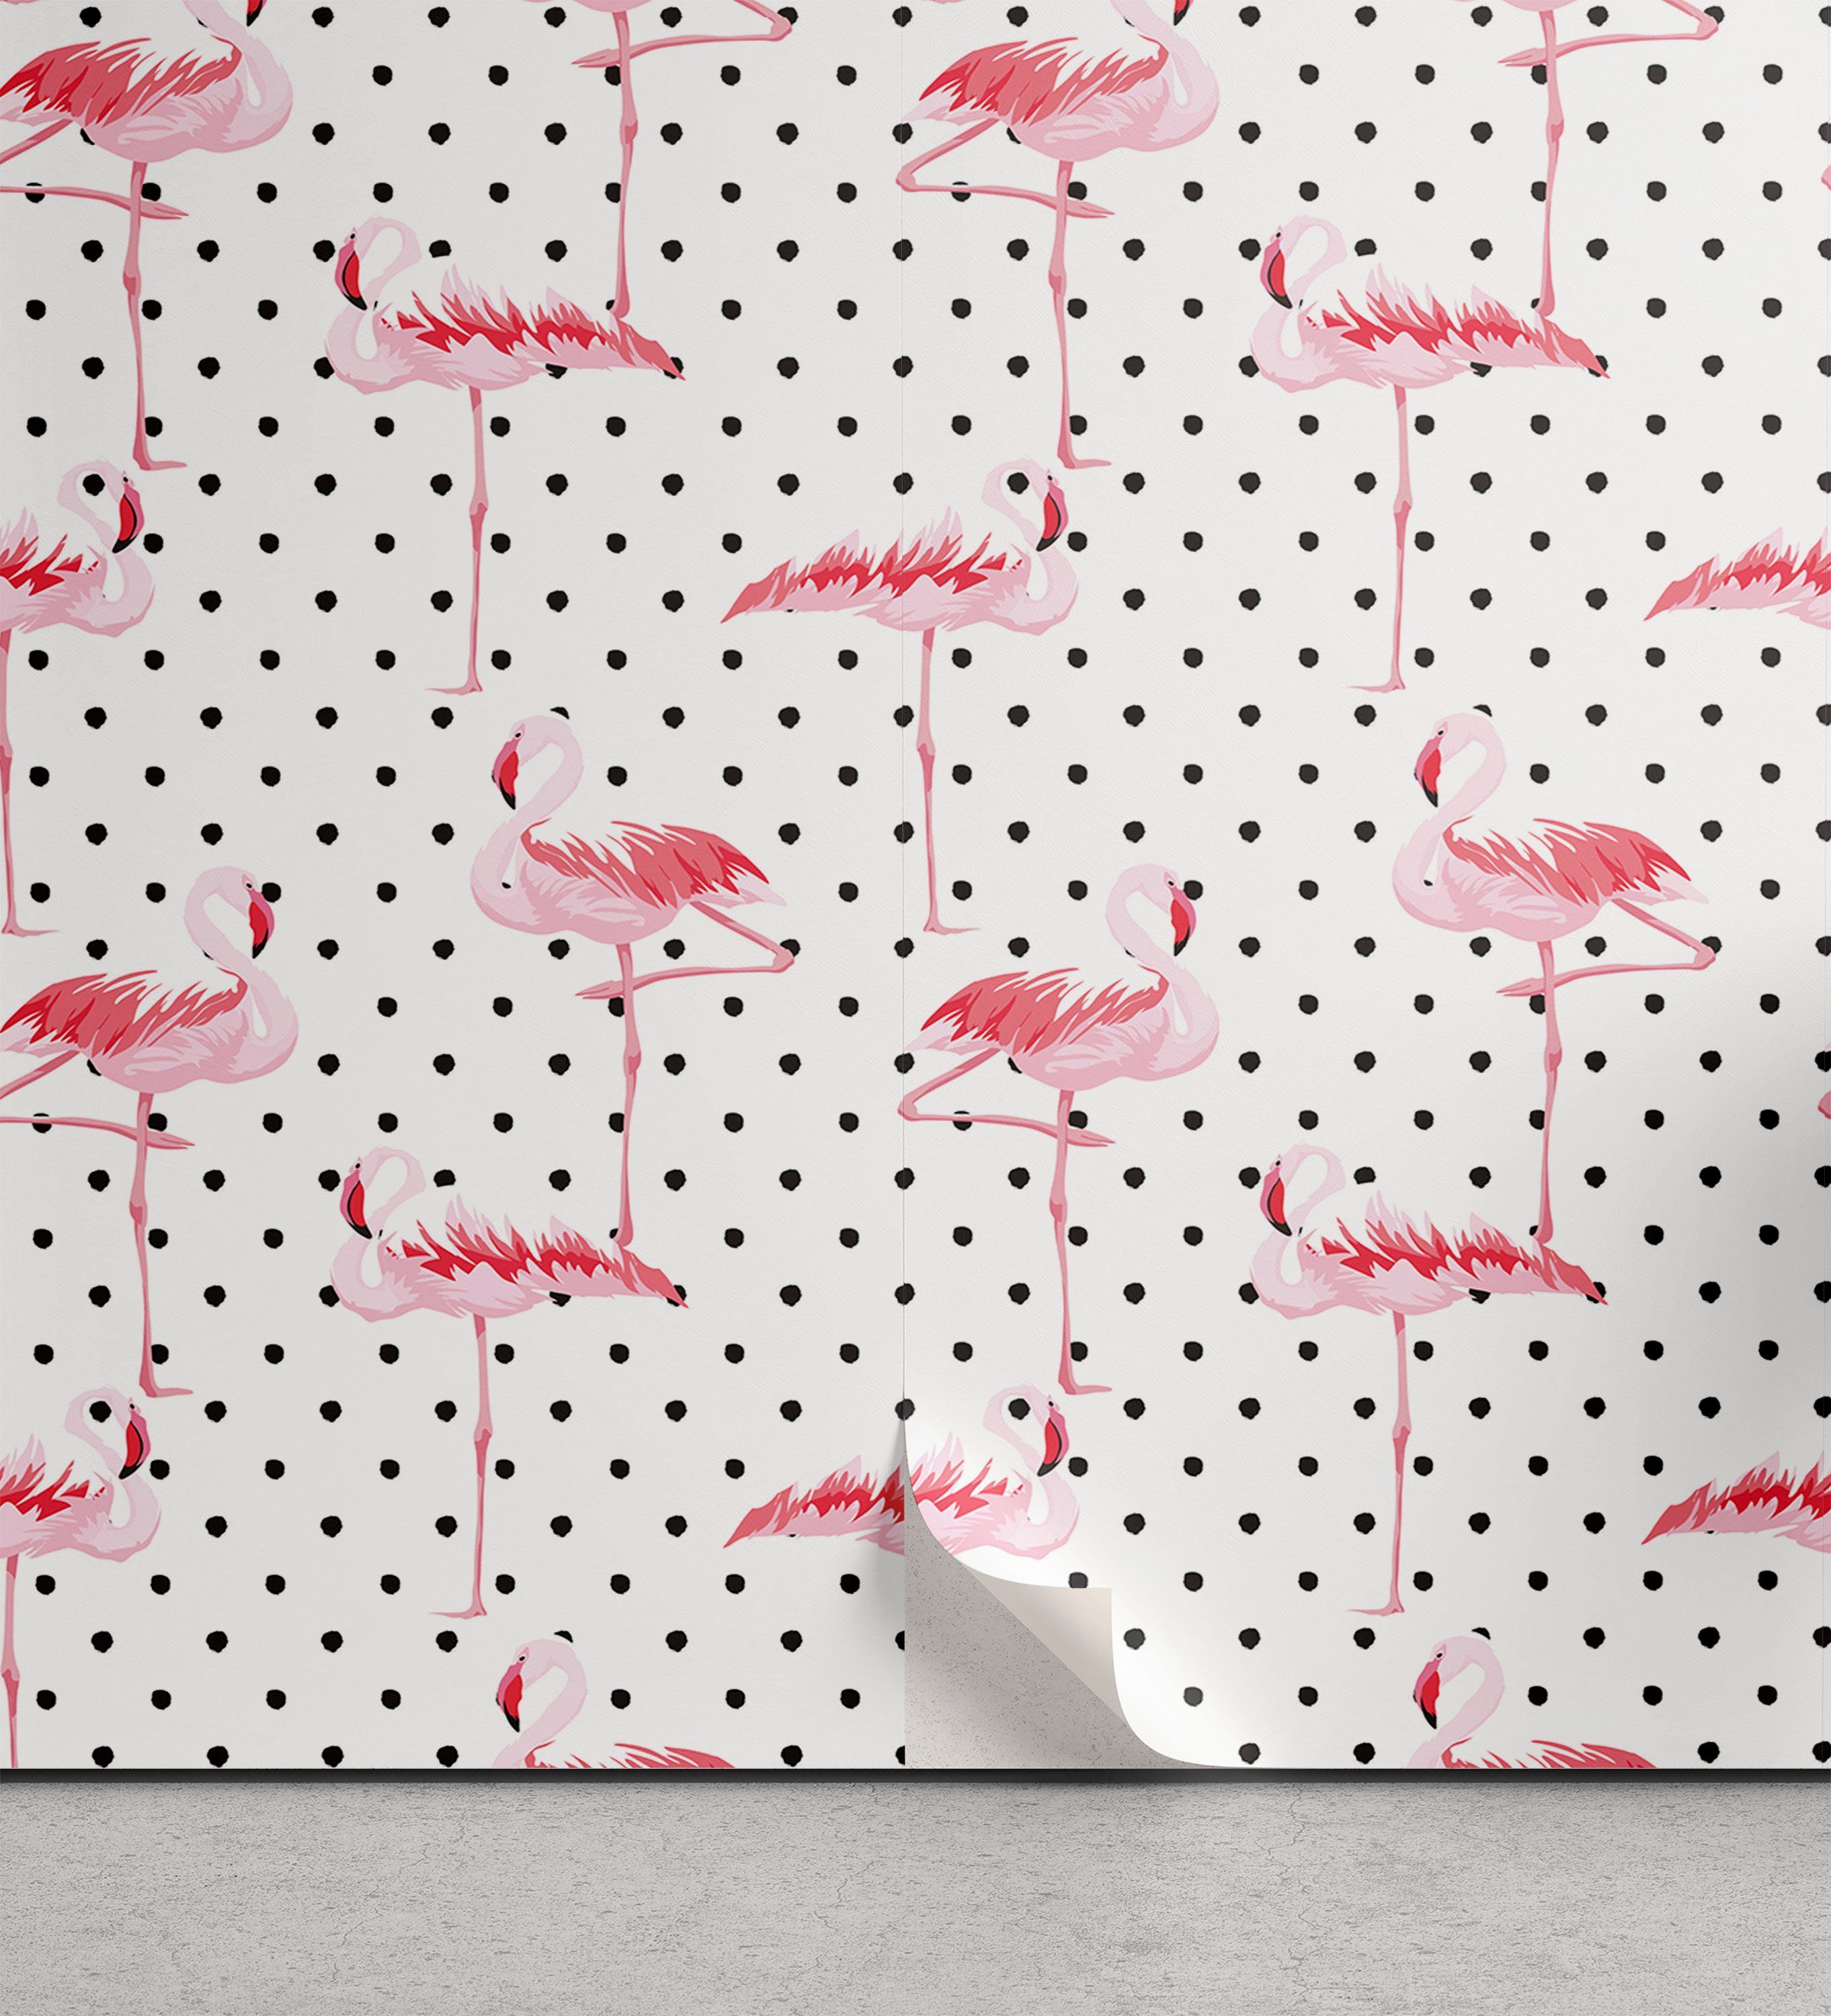 Abakuhaus Vinyltapete selbstklebendes Wohnzimmer Küchenakzent, Retro Flamingo Vögel Tupfen